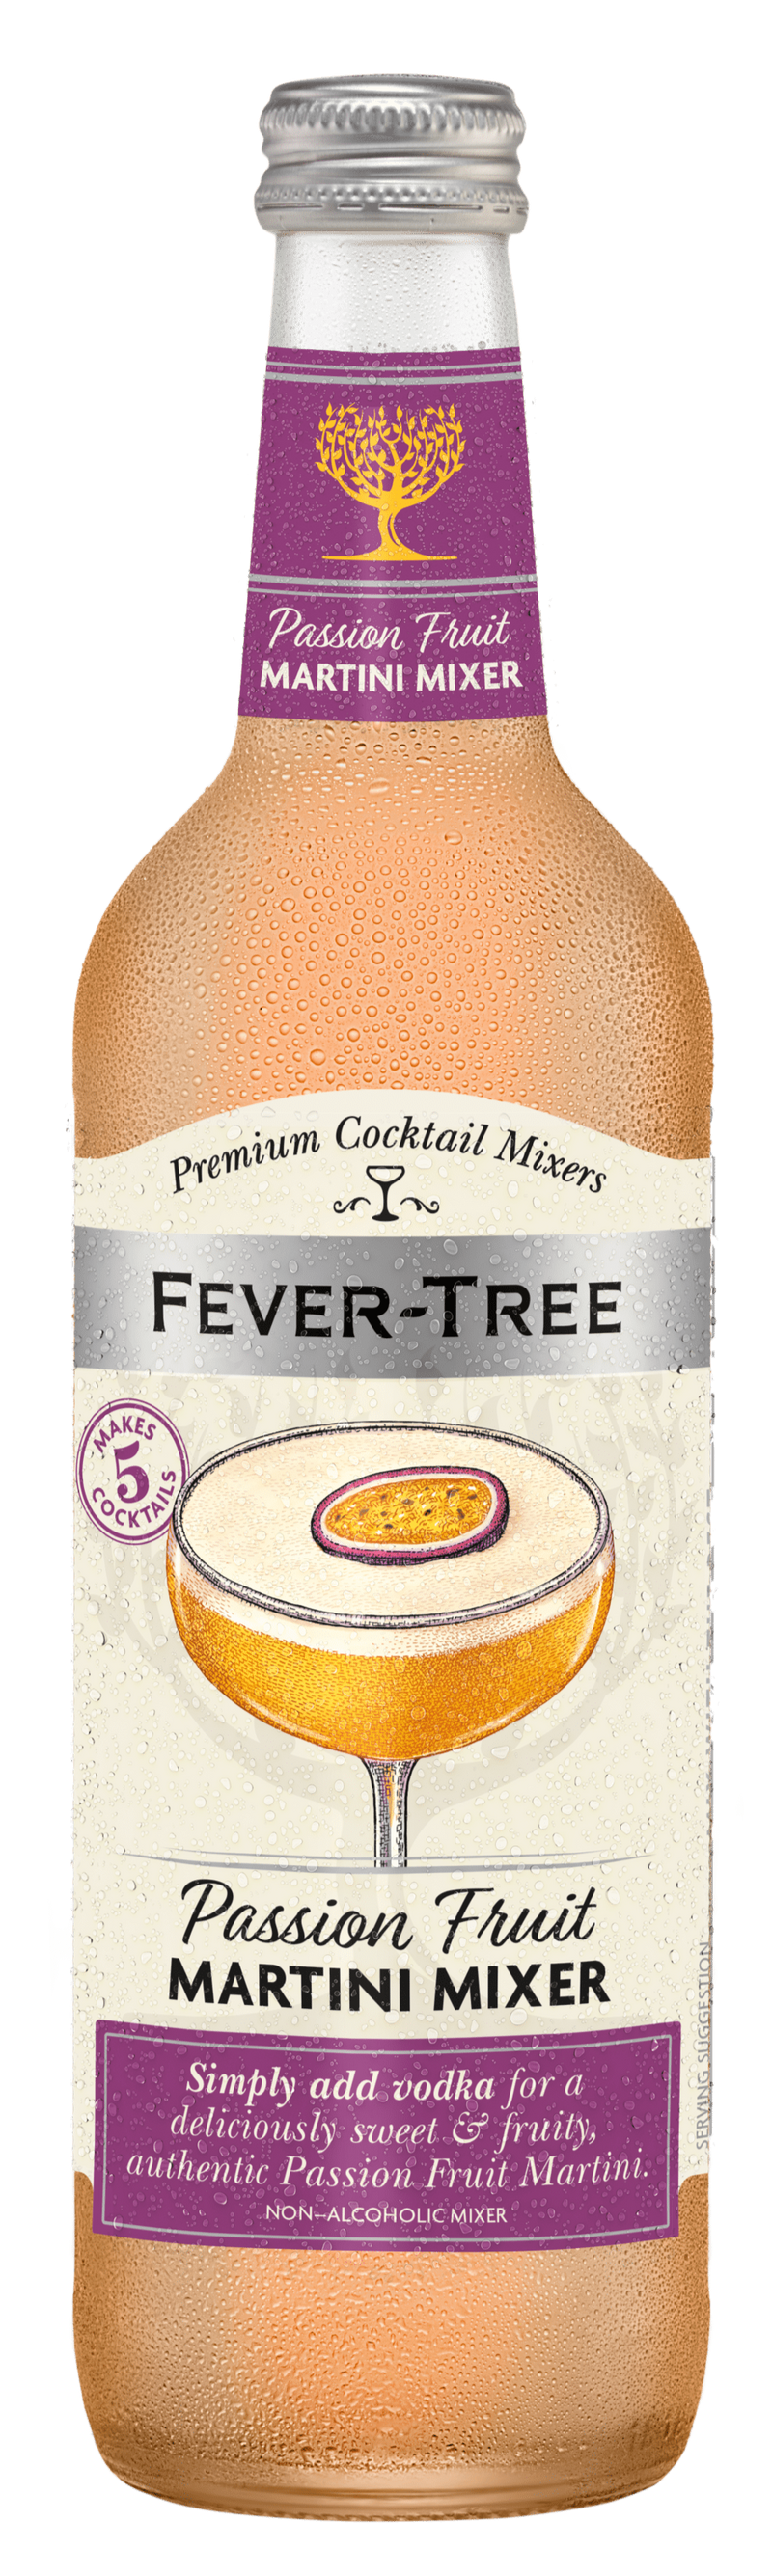 Fever-Tree Passion Fruit Martini Mixer 6x750ml